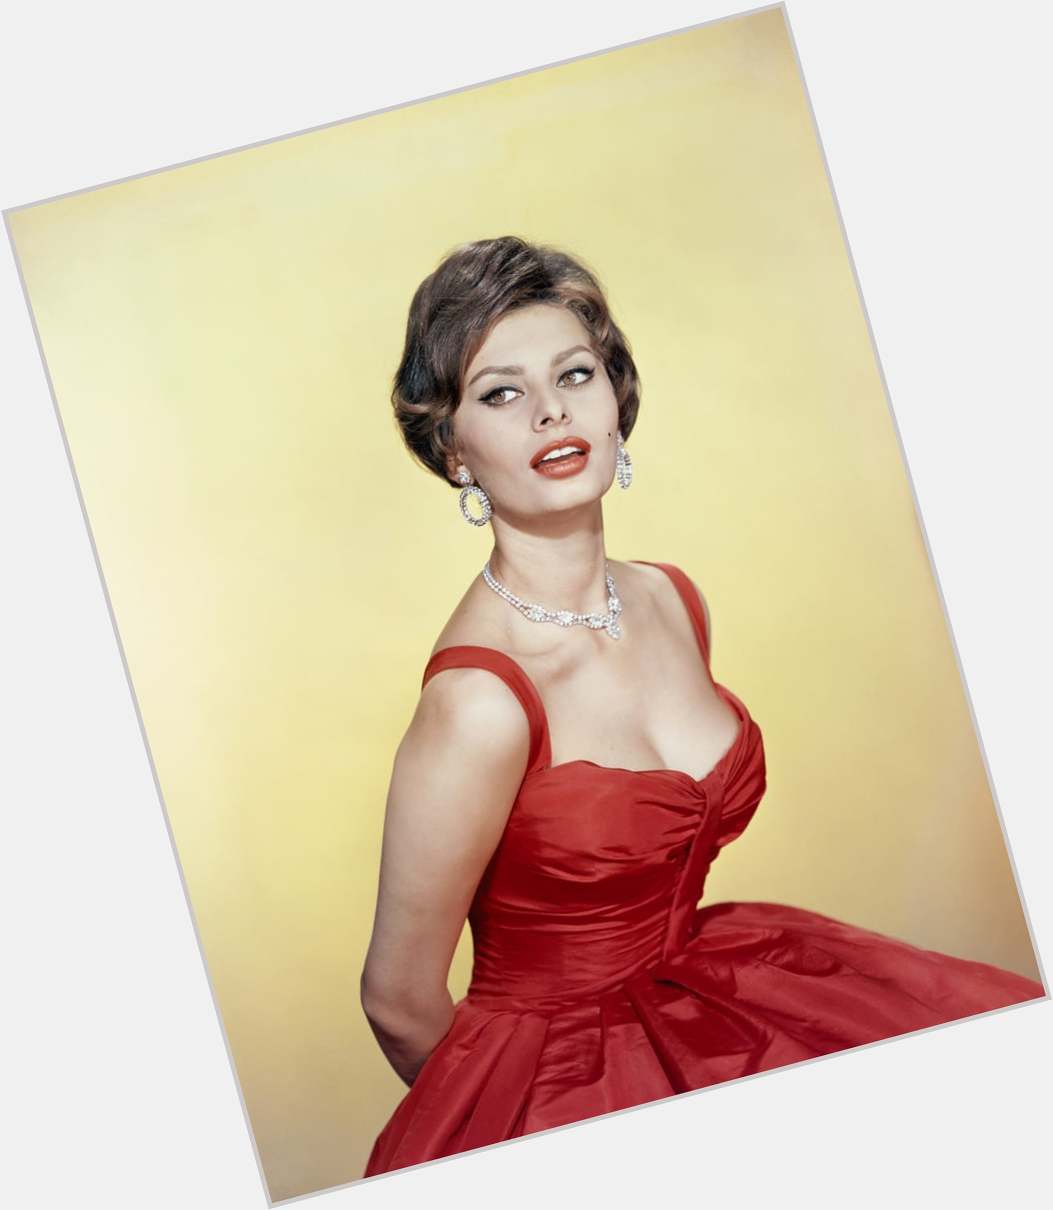 Wishing a very happy 84th birthday to Italian film icon Sophia Loren 